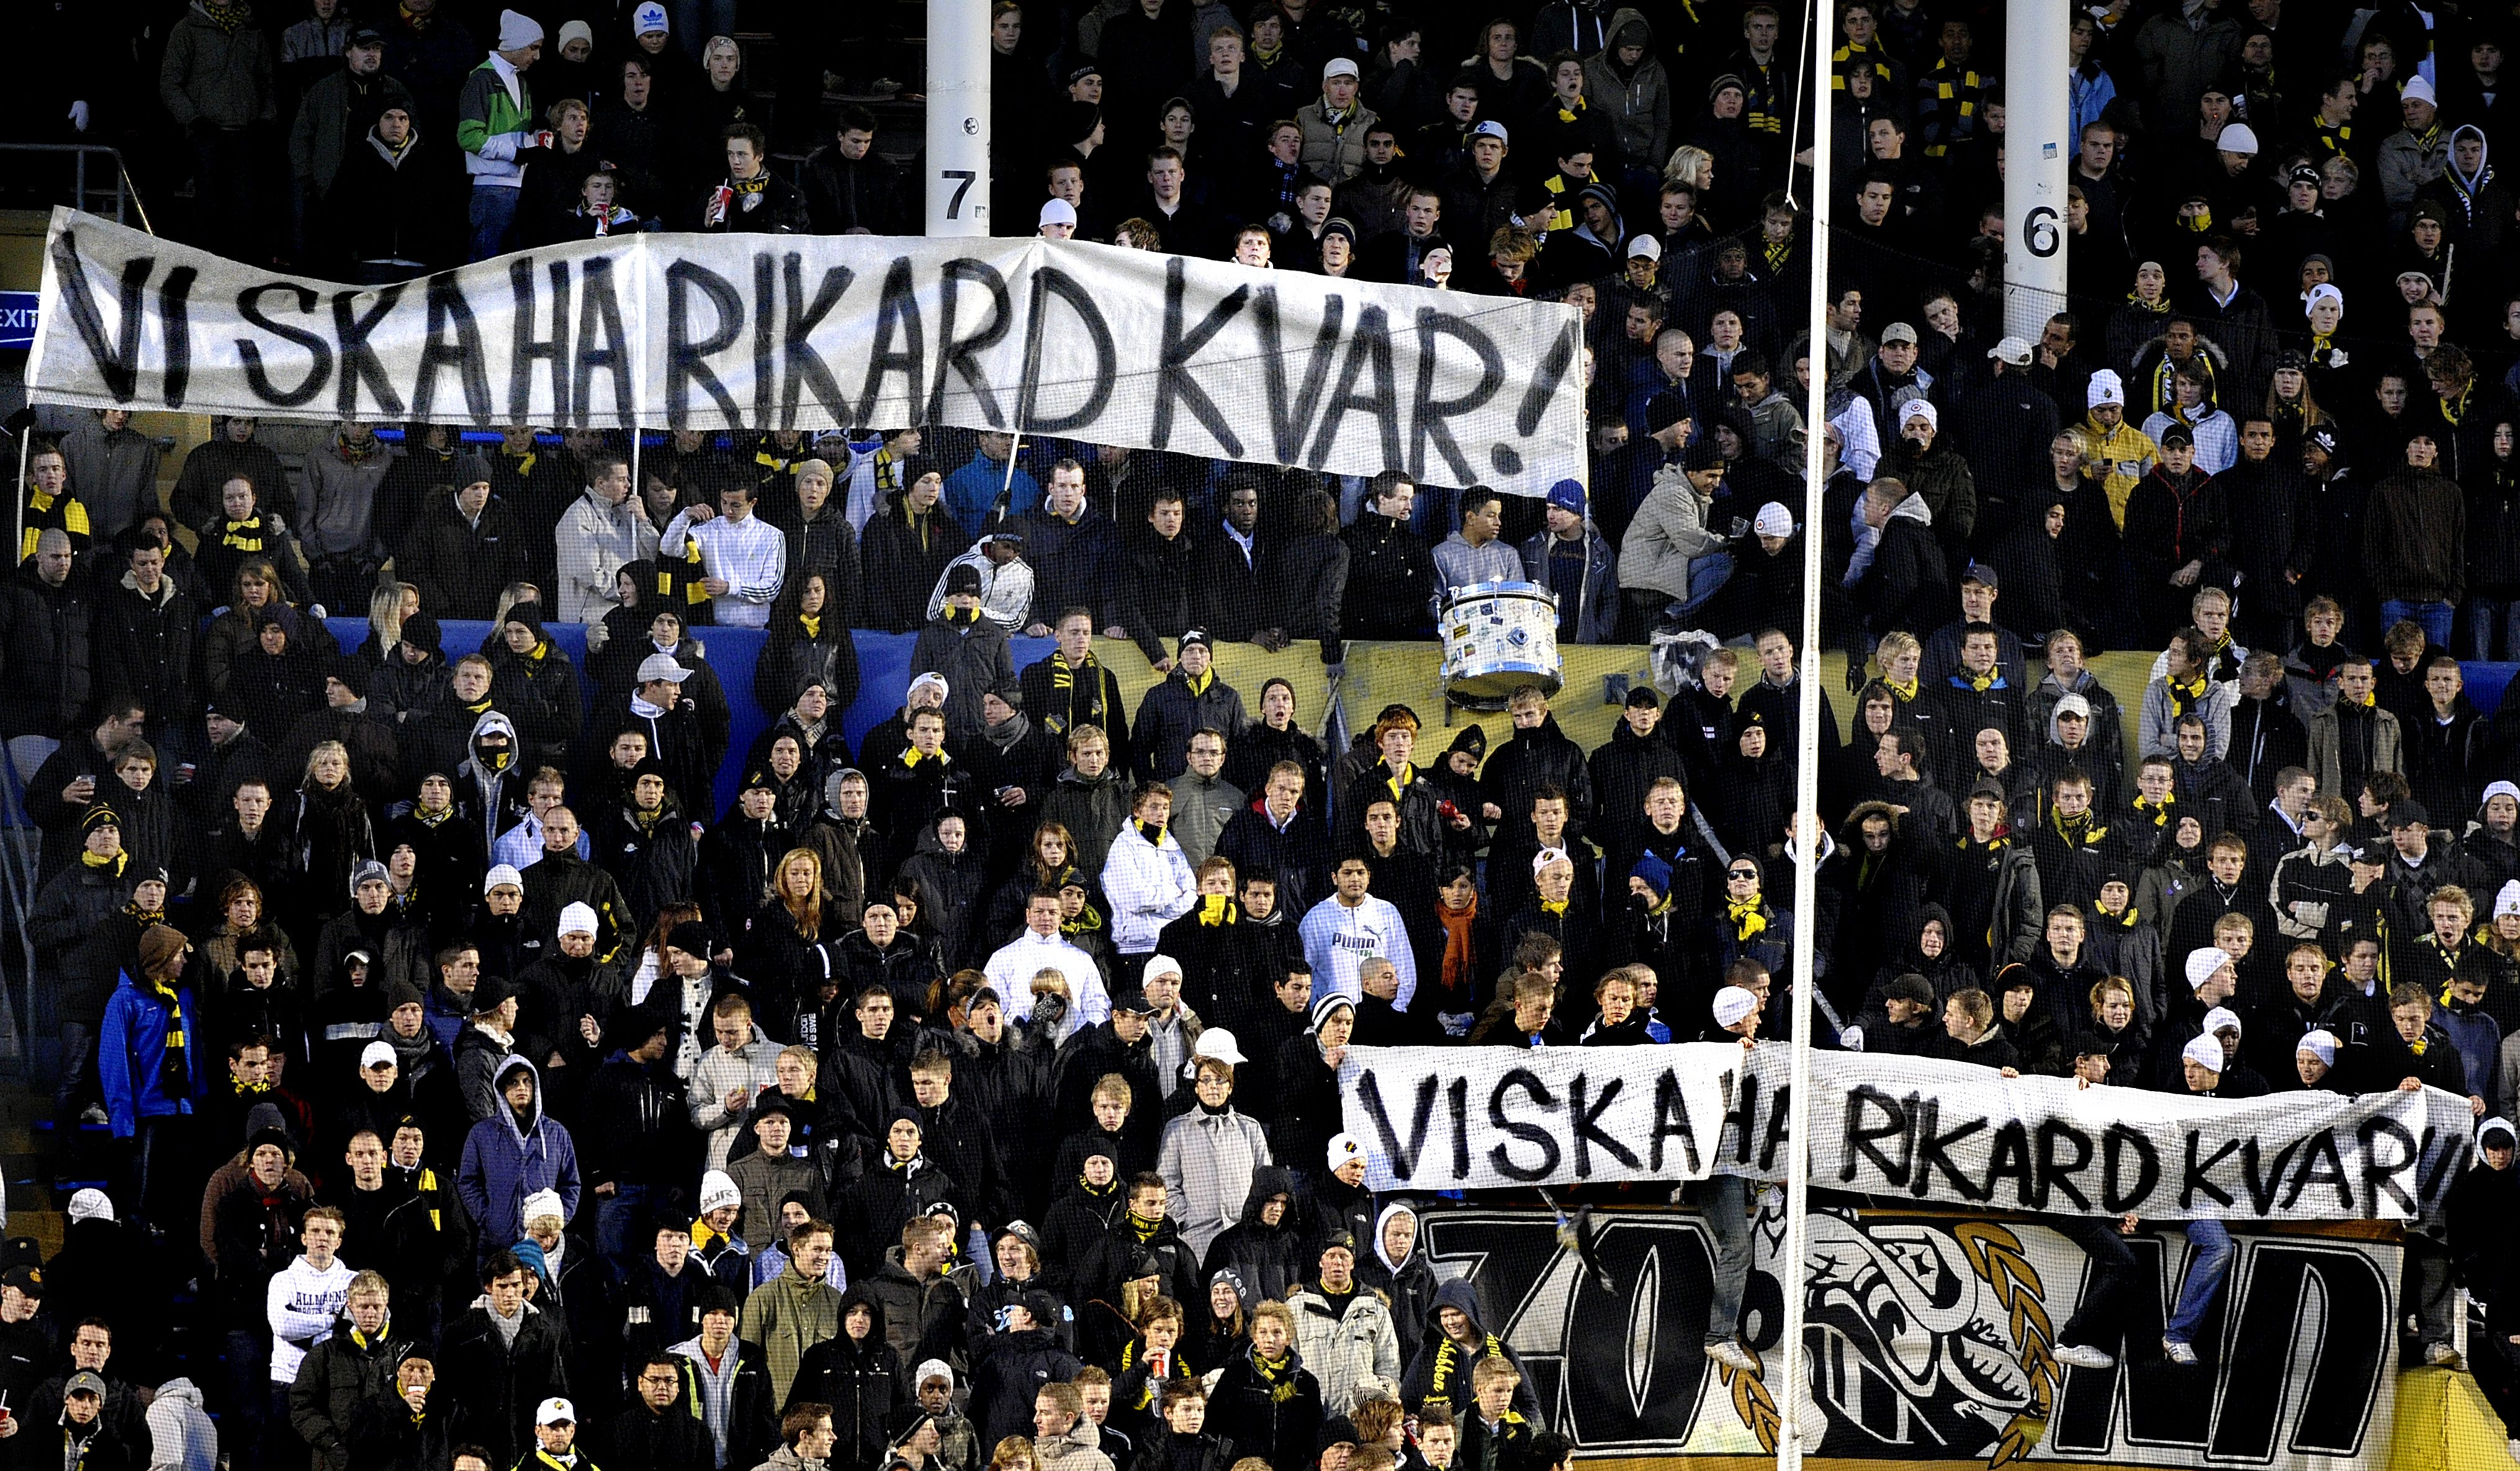 Kenny Pavey, AIK, Rikard Norling, Malmö FF, Black Army, Råsunda